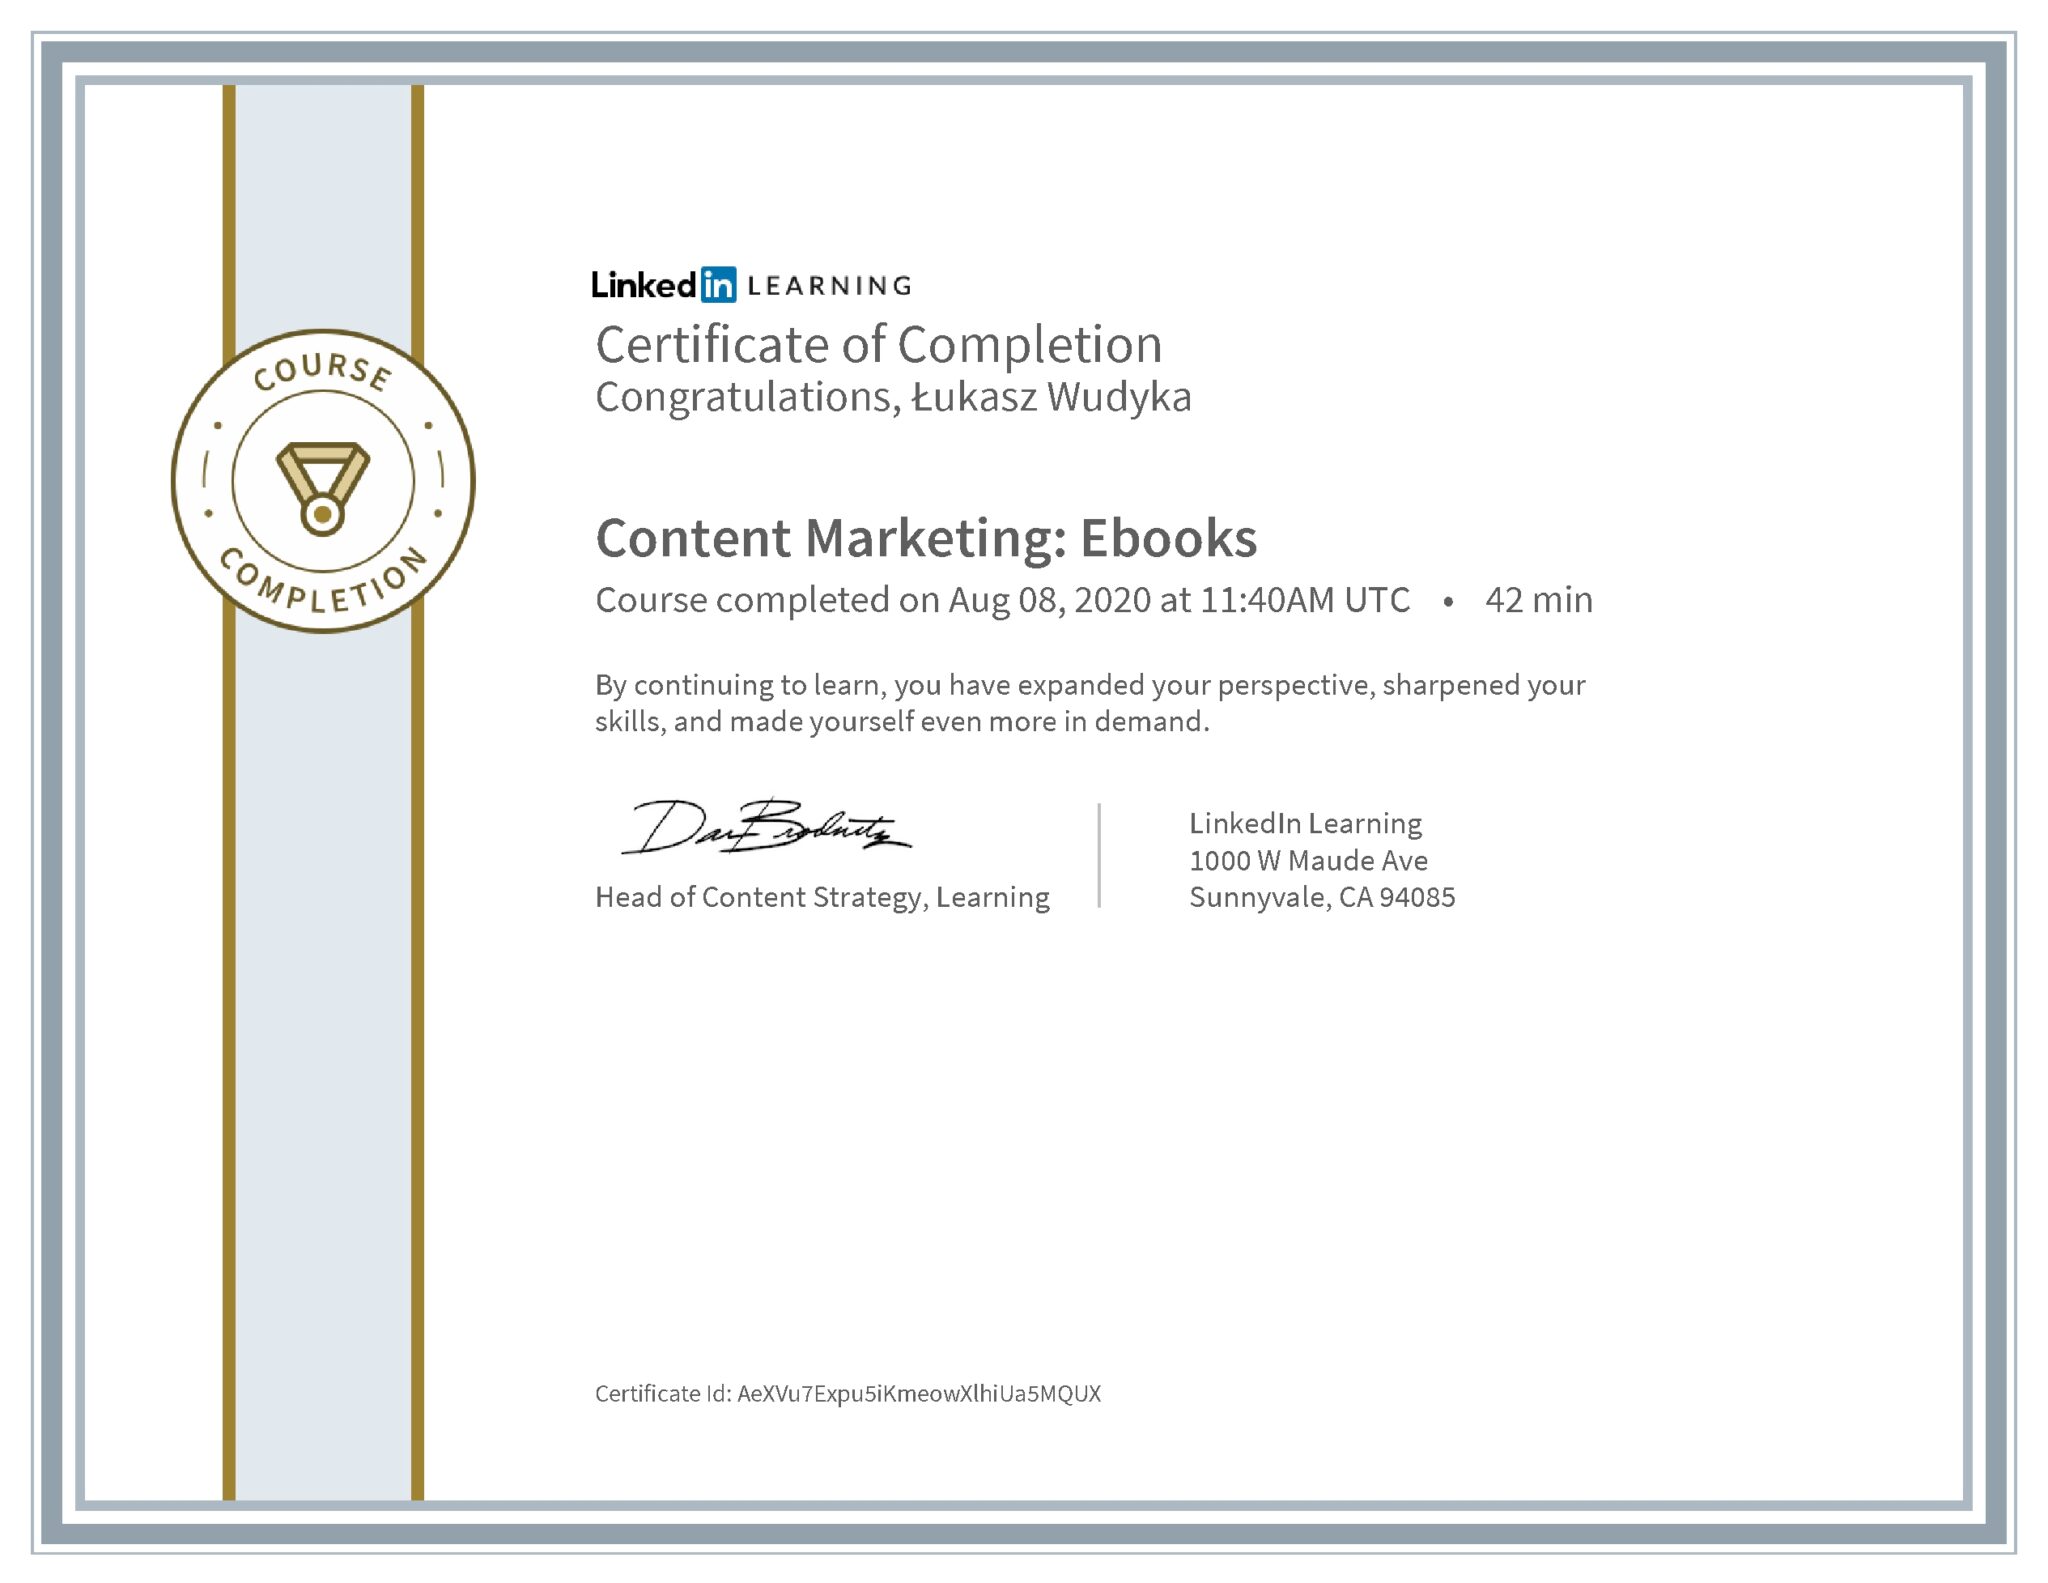 Łukasz Wudyka certyfikat LinkedIn Content Marketing: Ebooks